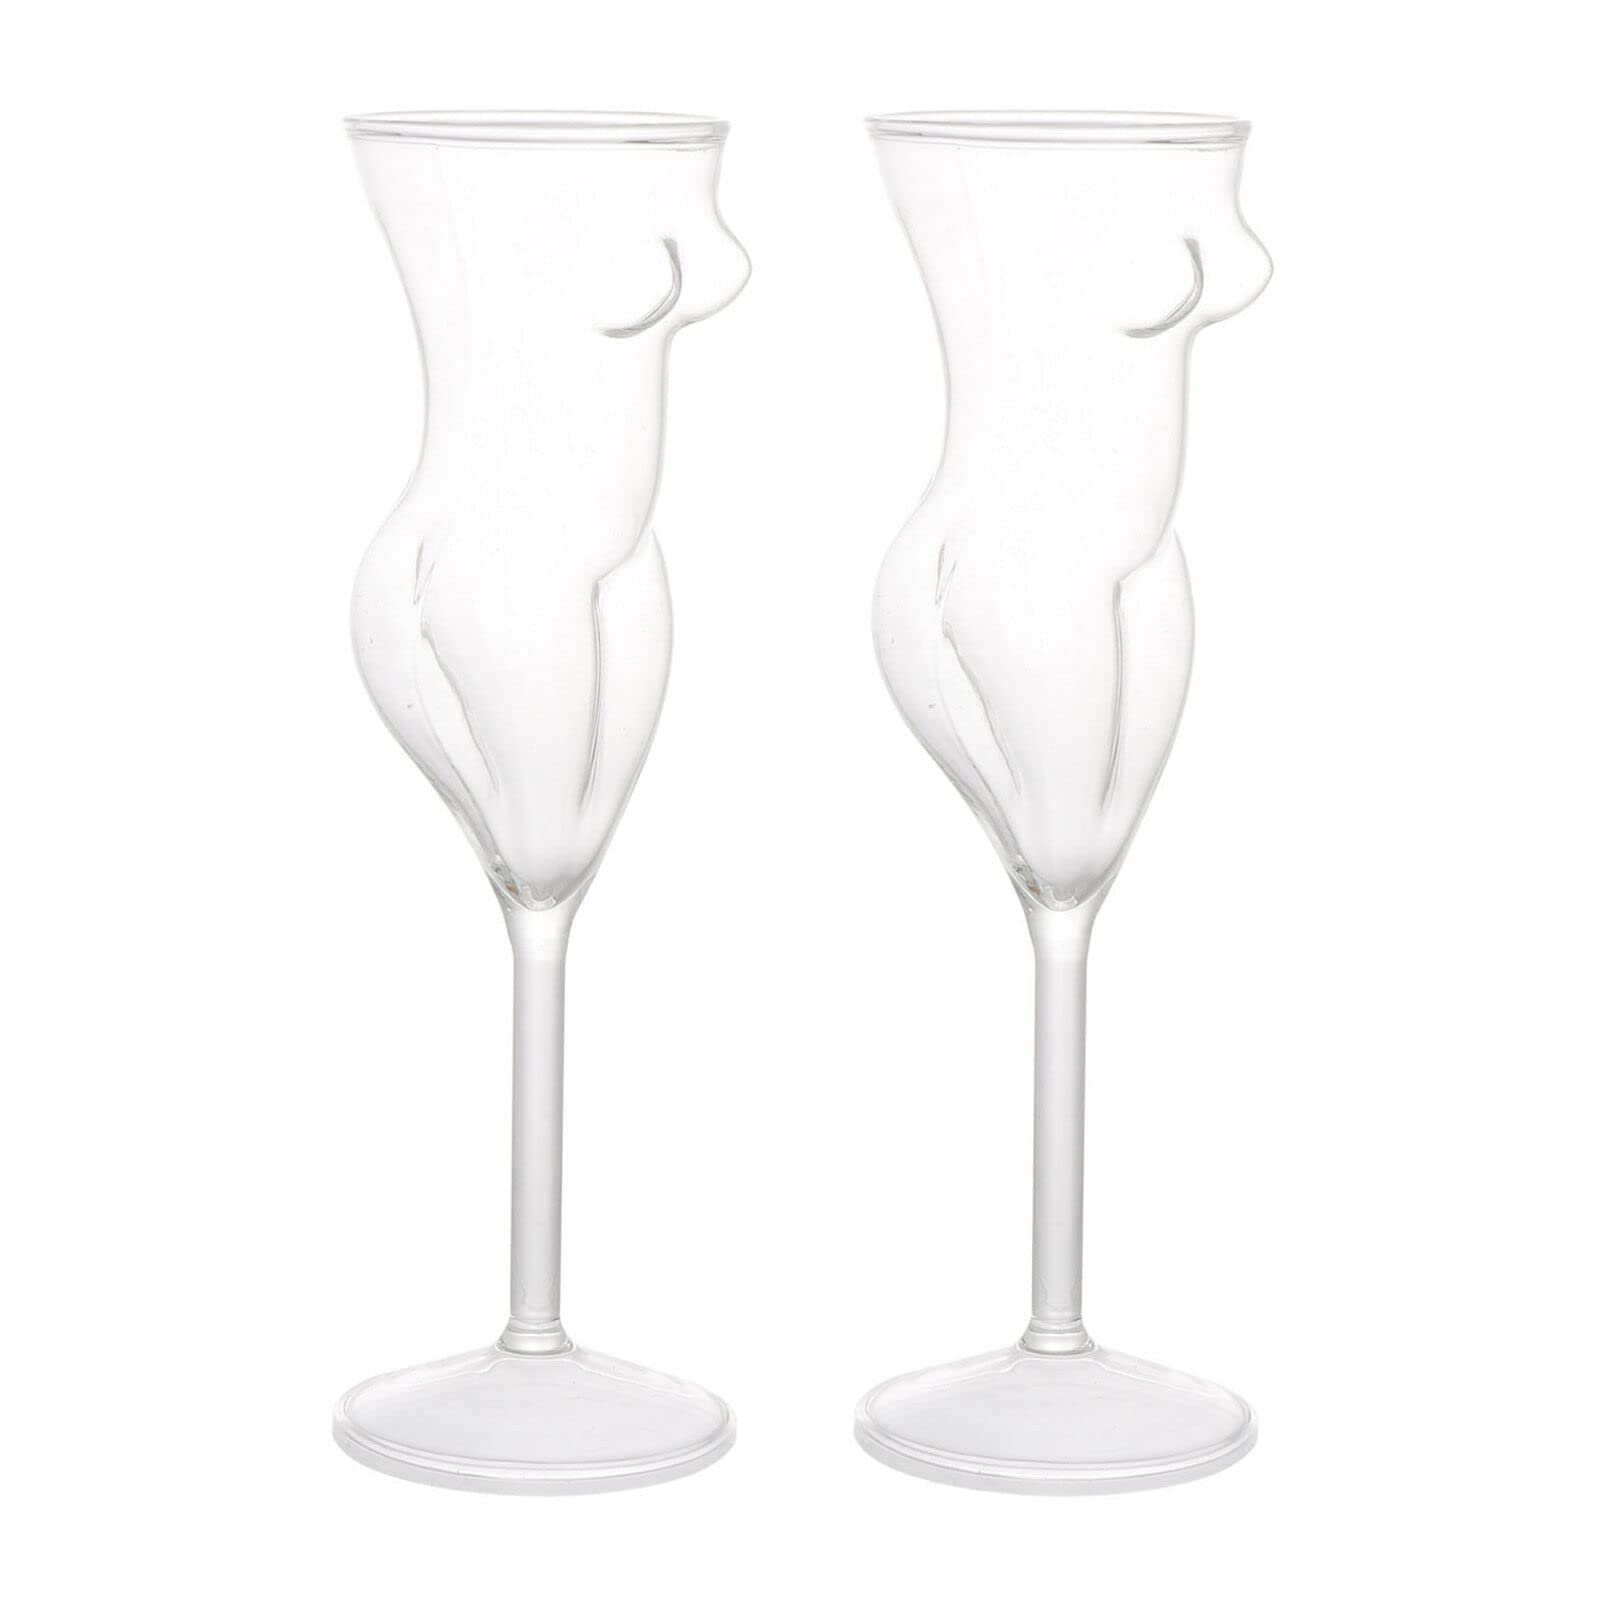 Novelty Champagne Goblet Wine Glasses Female Body Glasses for Home Restaurant Bar Party Decoration